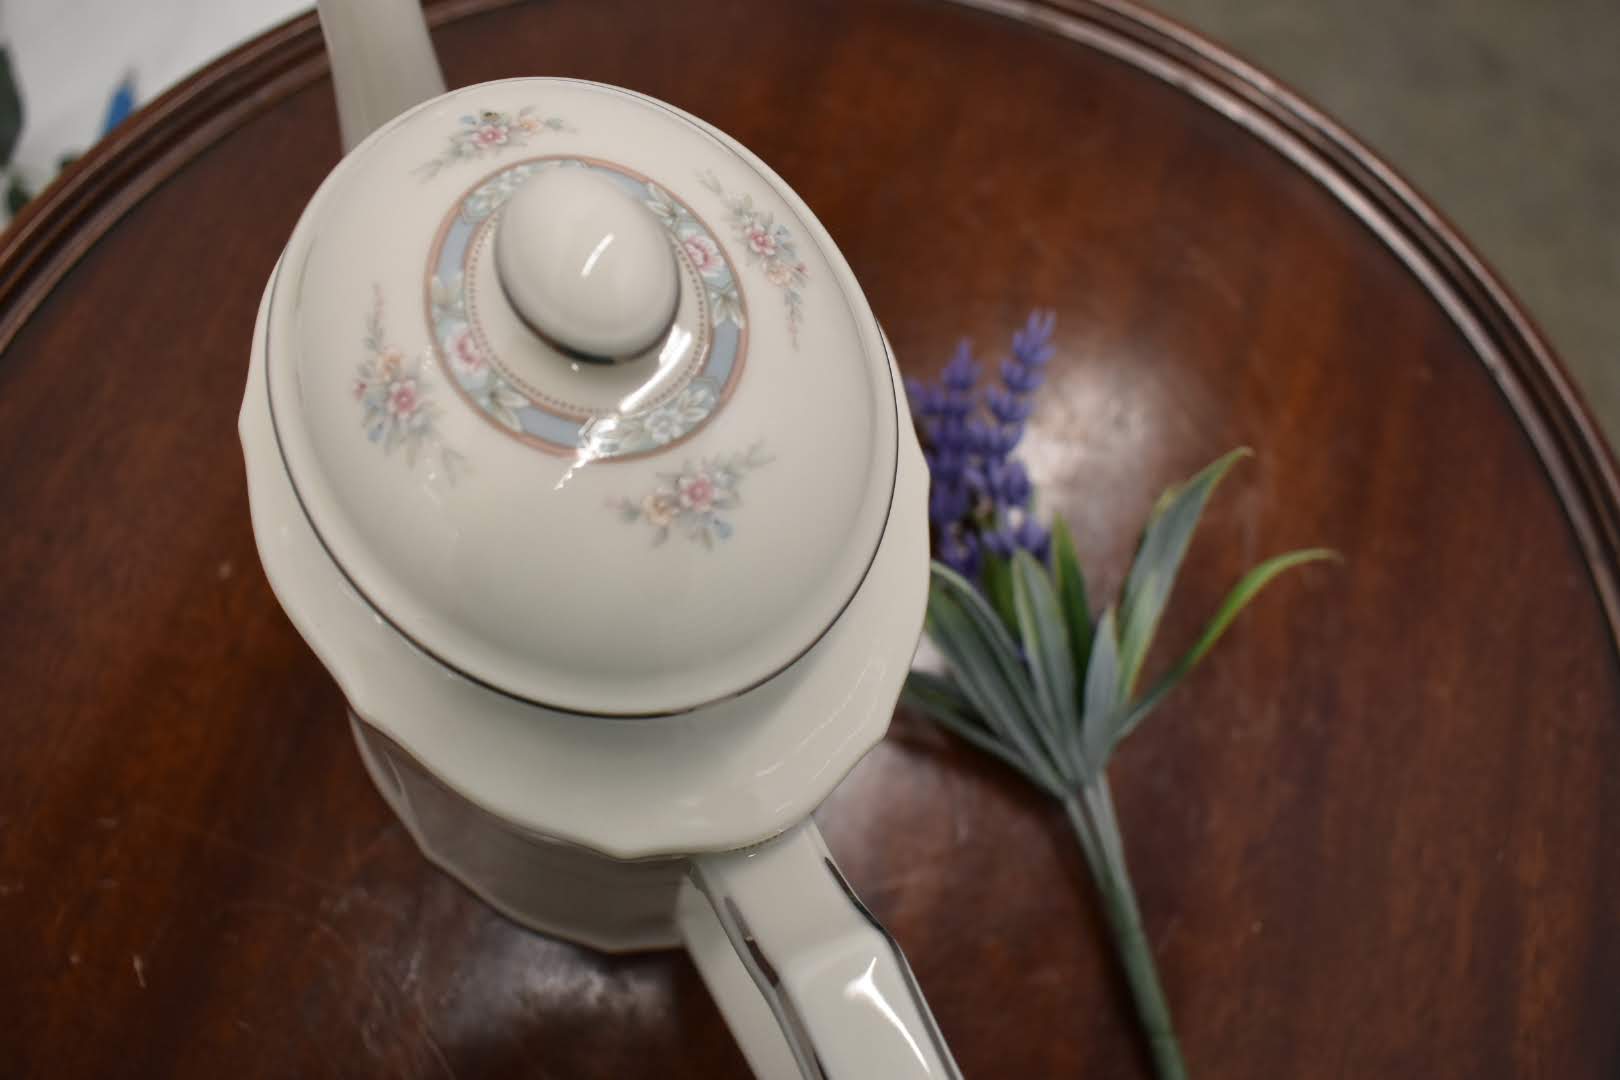 Noritake Rothschild - Fine Porcelain China - Tea Coffee Pot